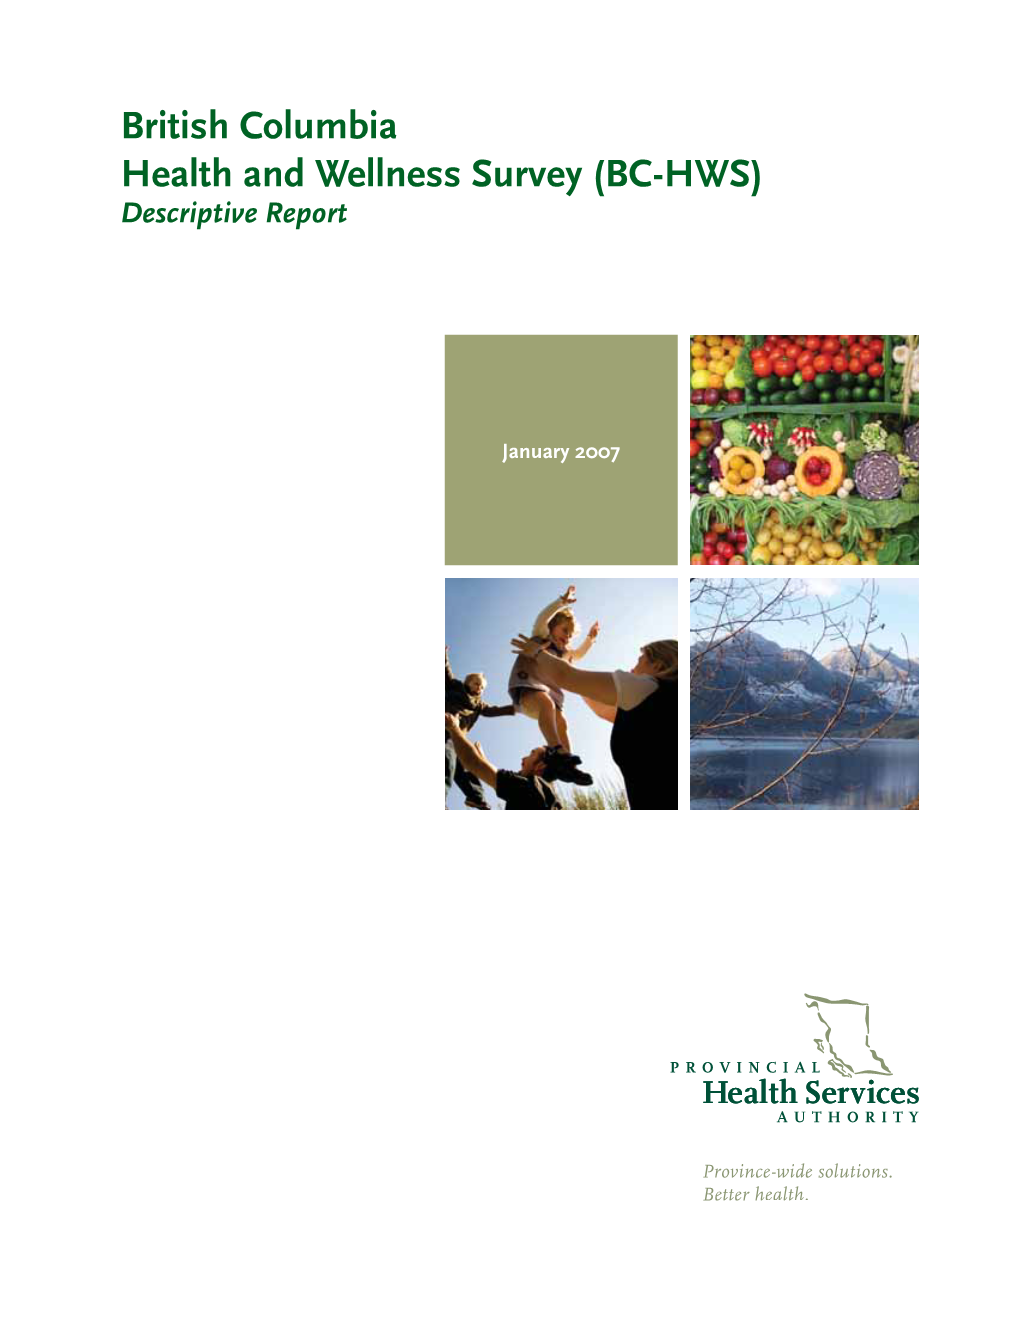 British Columbia Health and Wellness Survey (BC-HWS) Descriptive Report